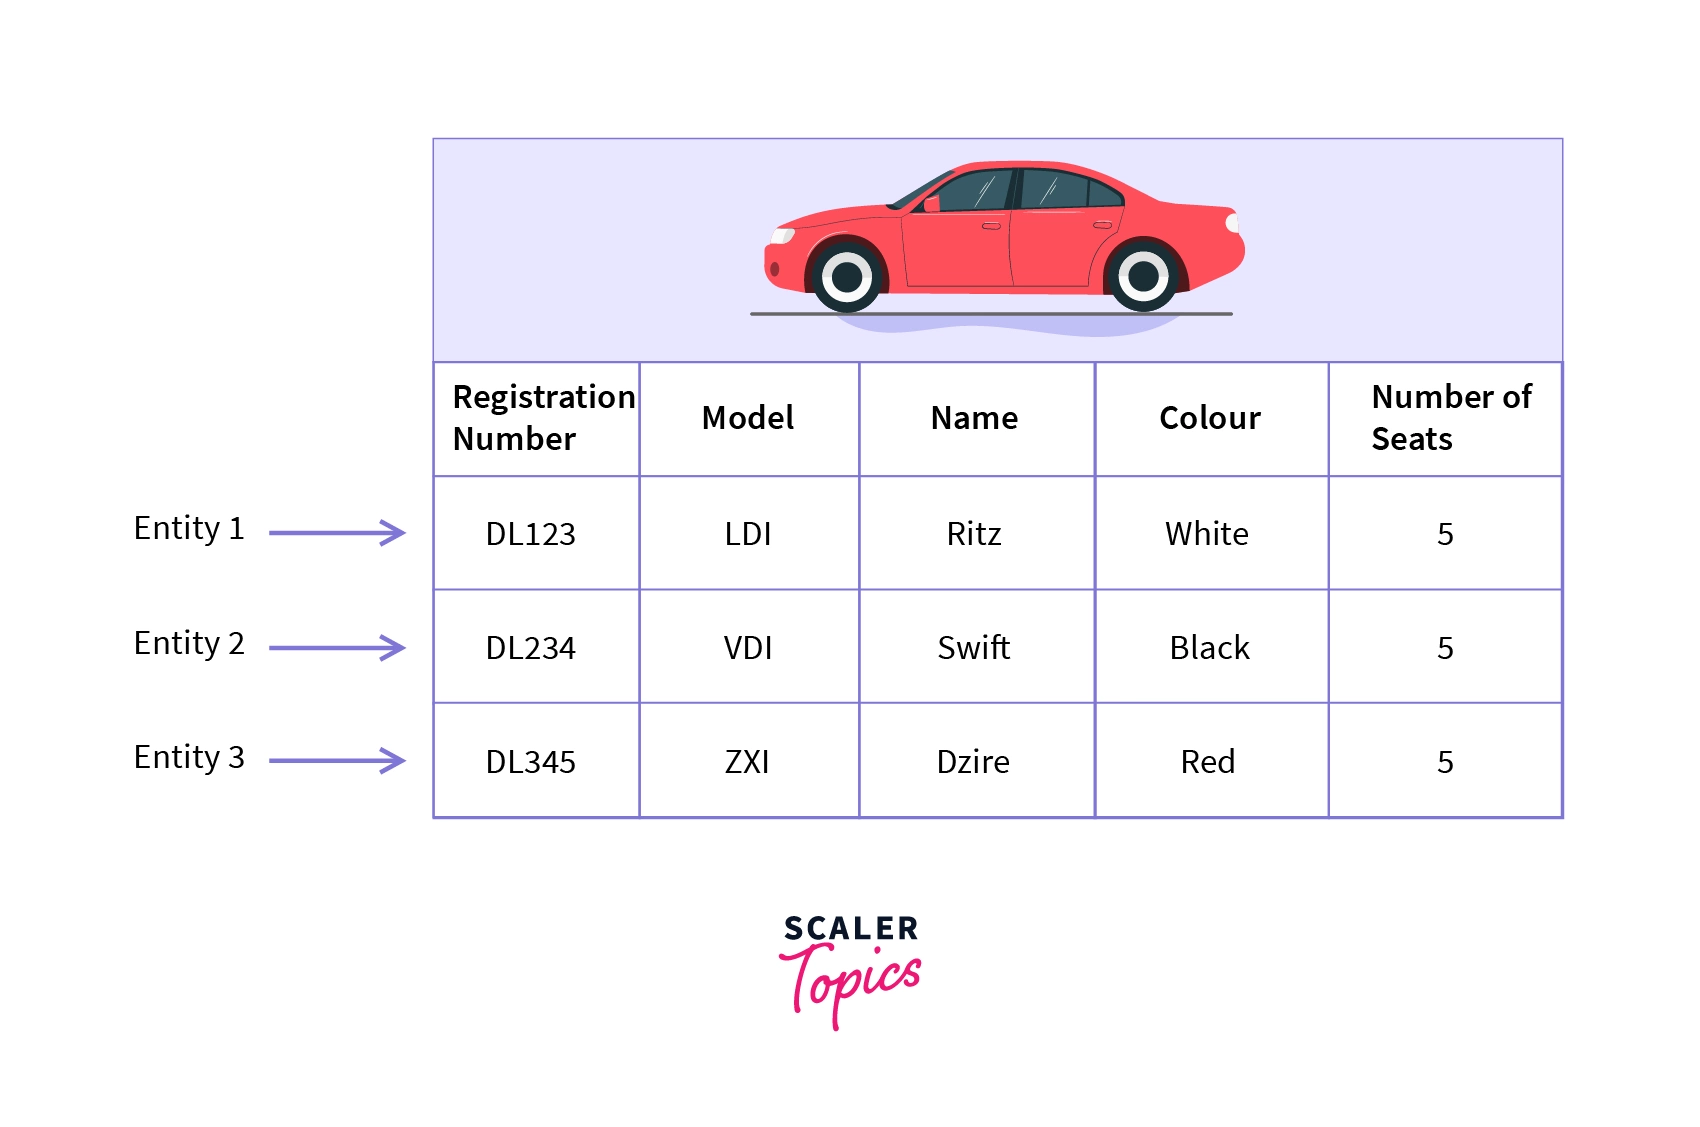 tabular representation of the car entities